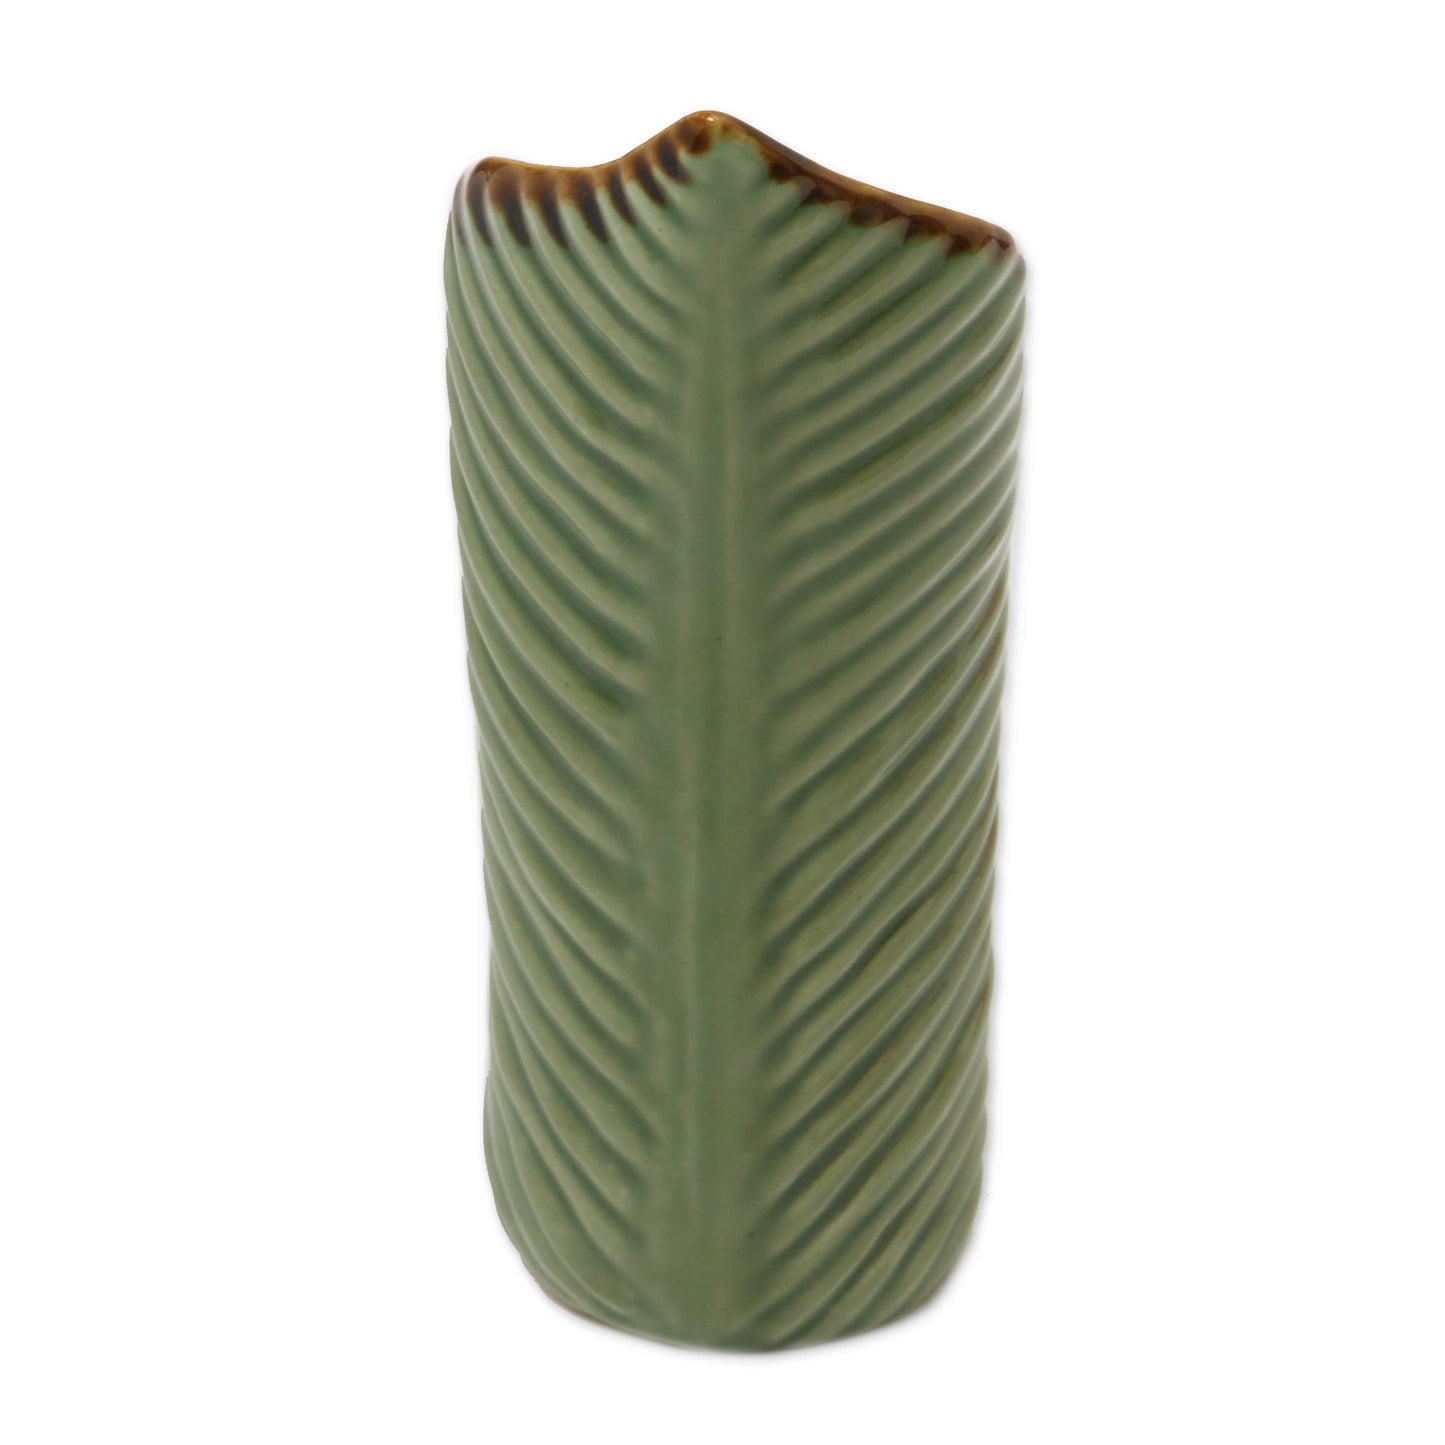 Banana Rolls Green Ceramic Vase